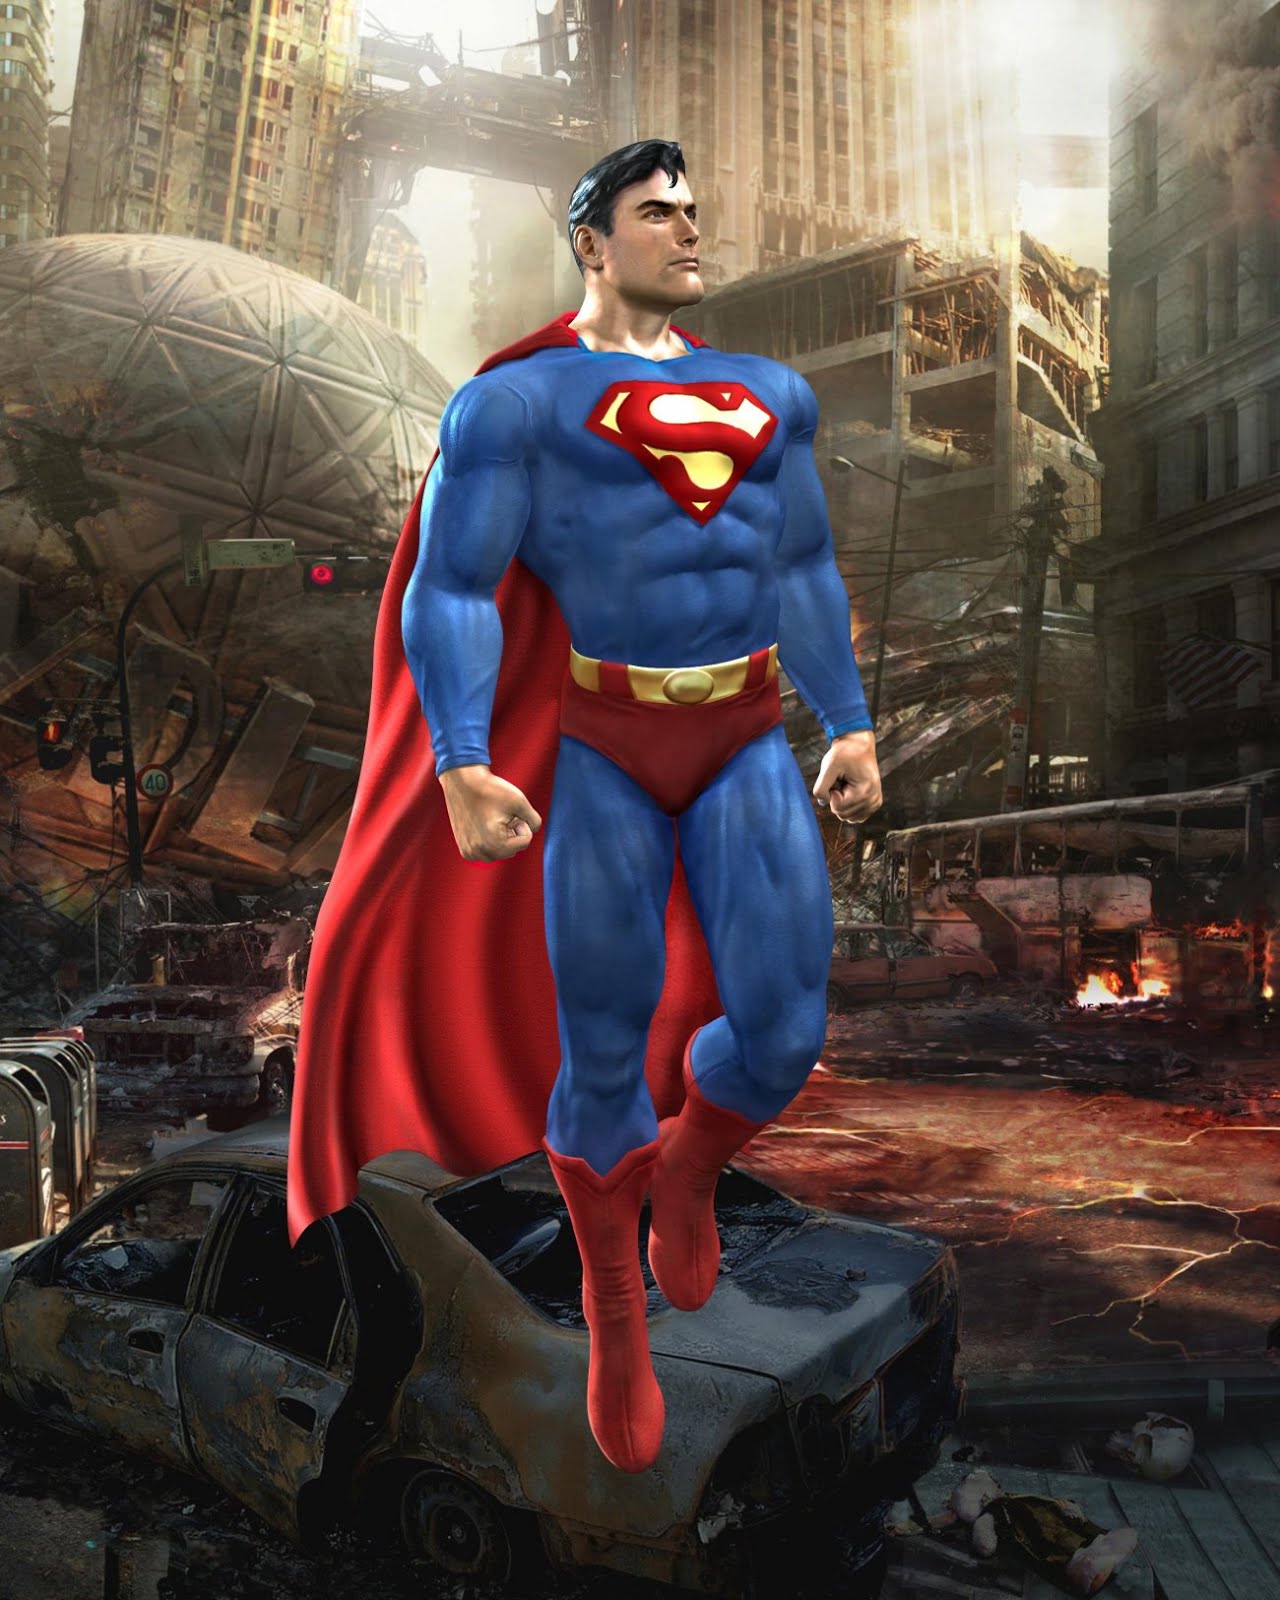 superhero wallpaper hd,superman,superhero,fictional character,hero,action figure